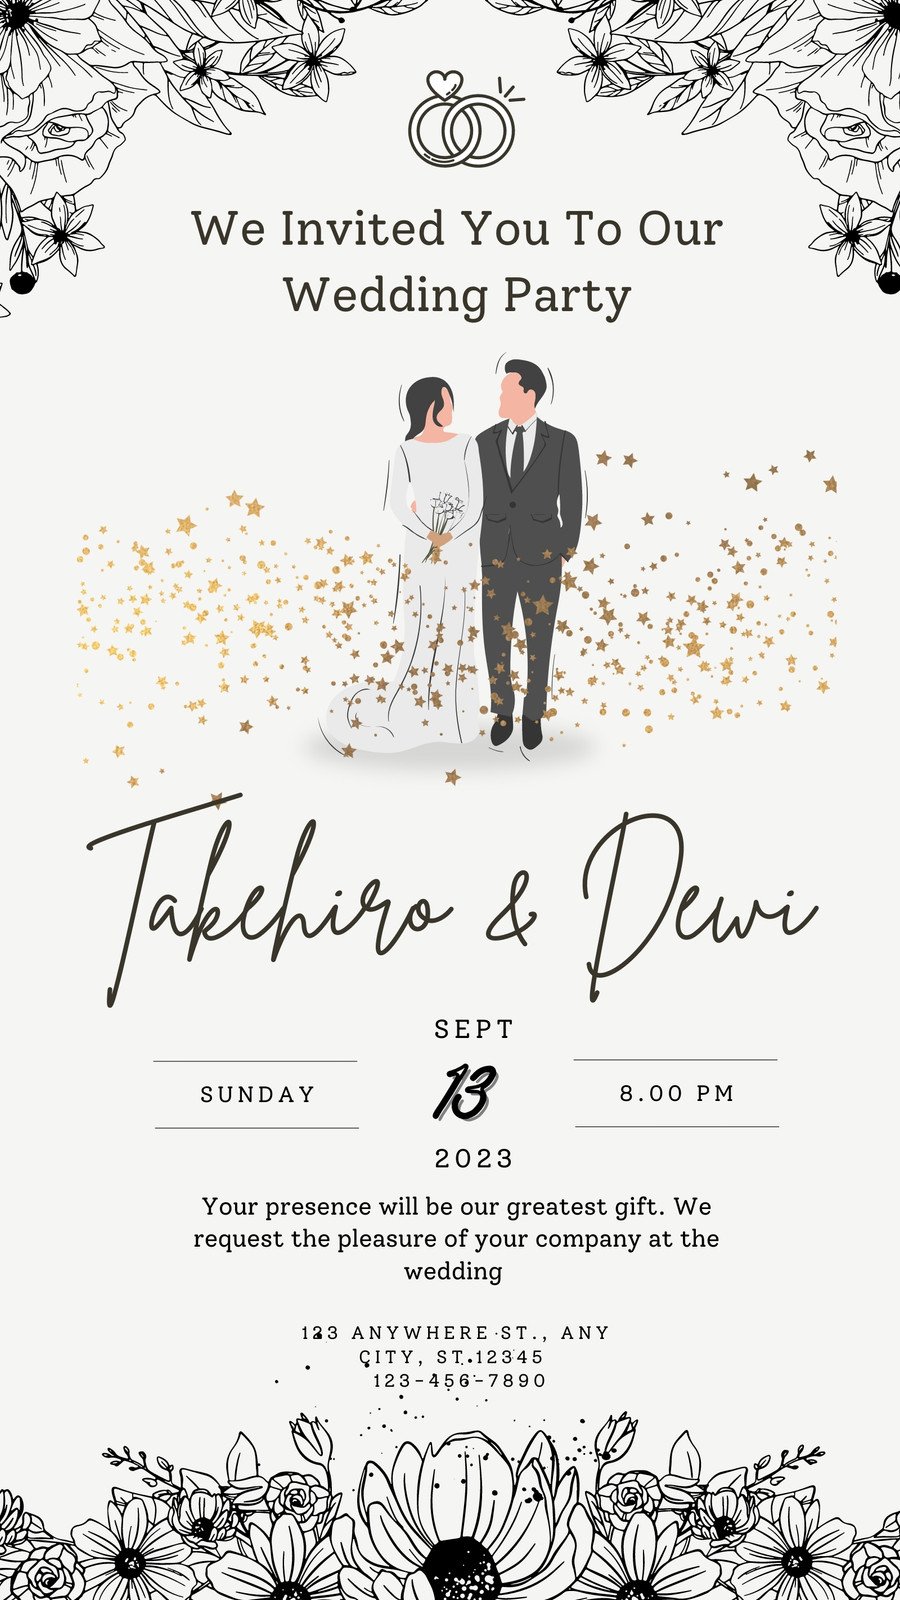 Wedding-related design templates